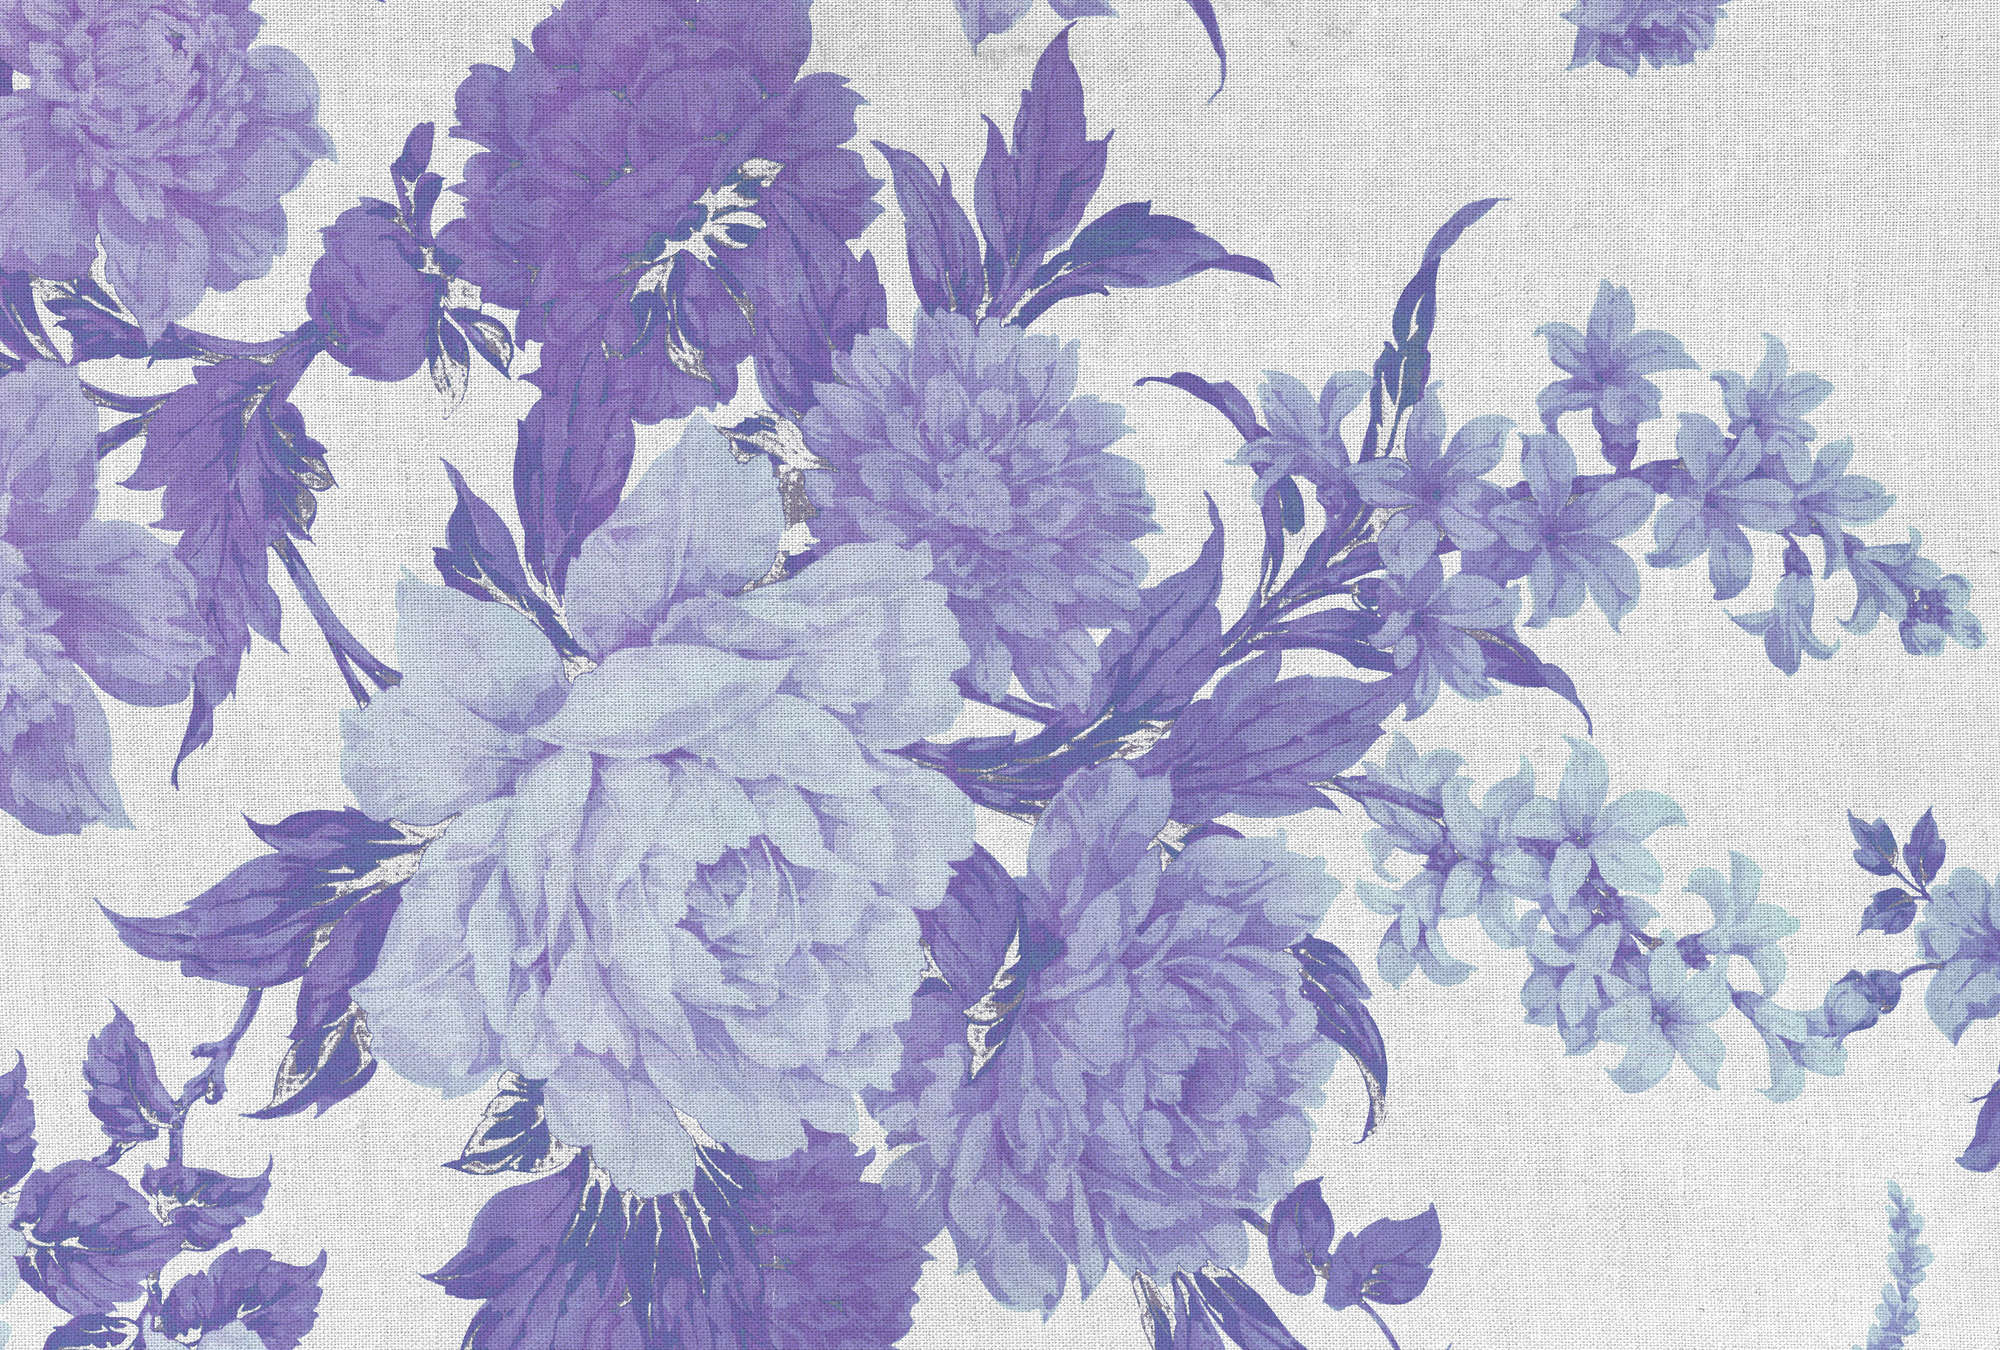             Fototapete Rosen, Blumenornament & Textil Look – Violett, Blau, Weiß
        